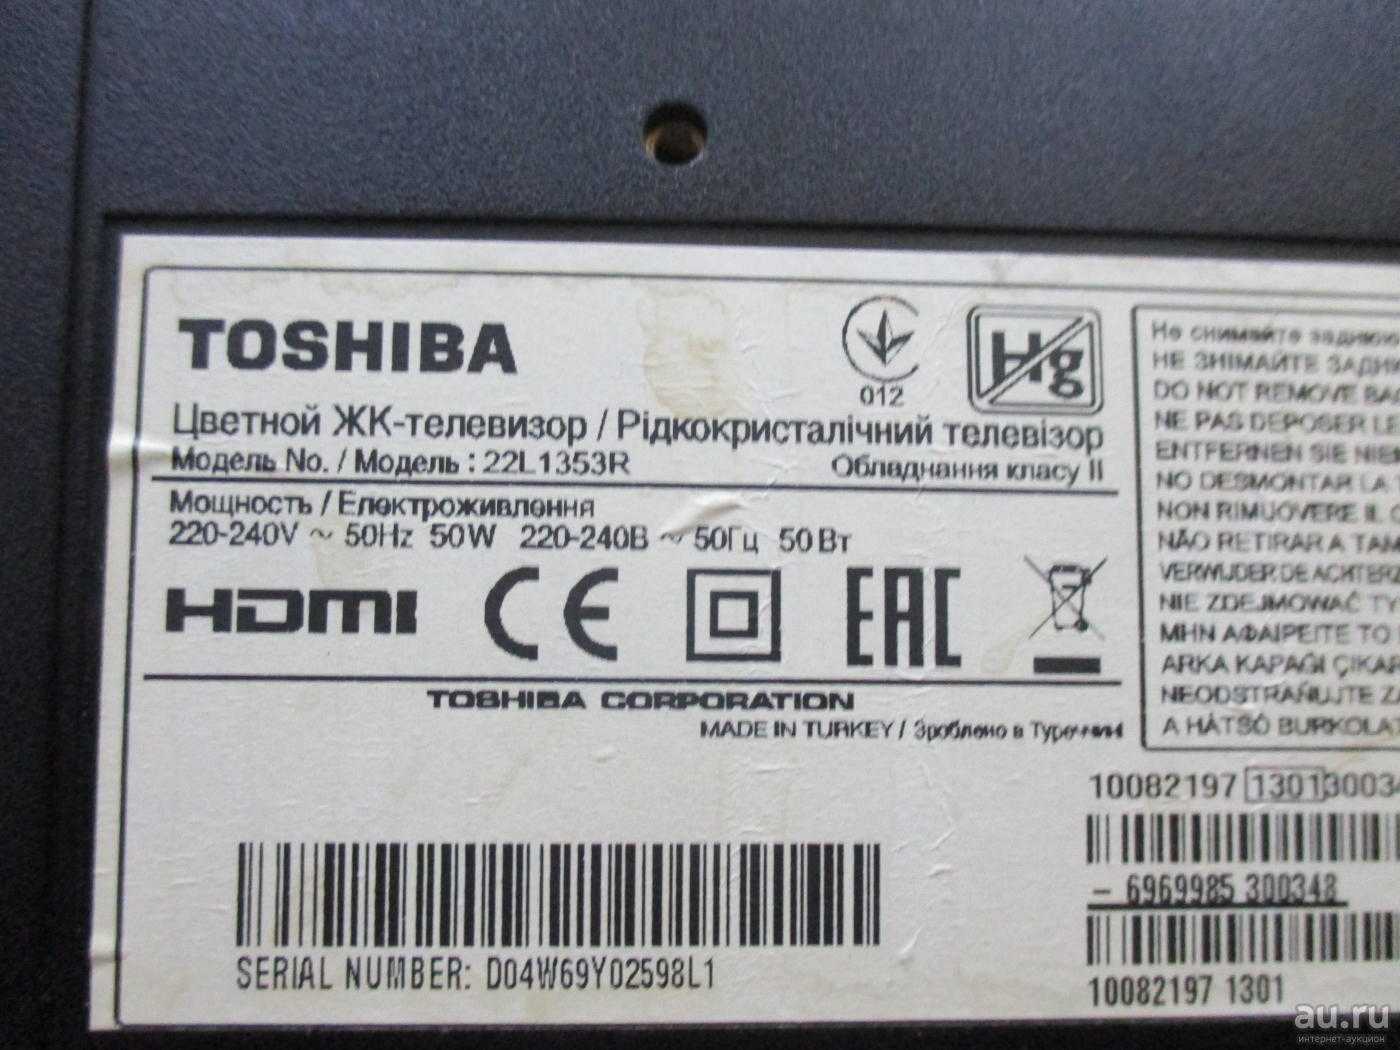 Toshiba 22l1353 - описание, характеристики, тест, отзывы, цены, фото